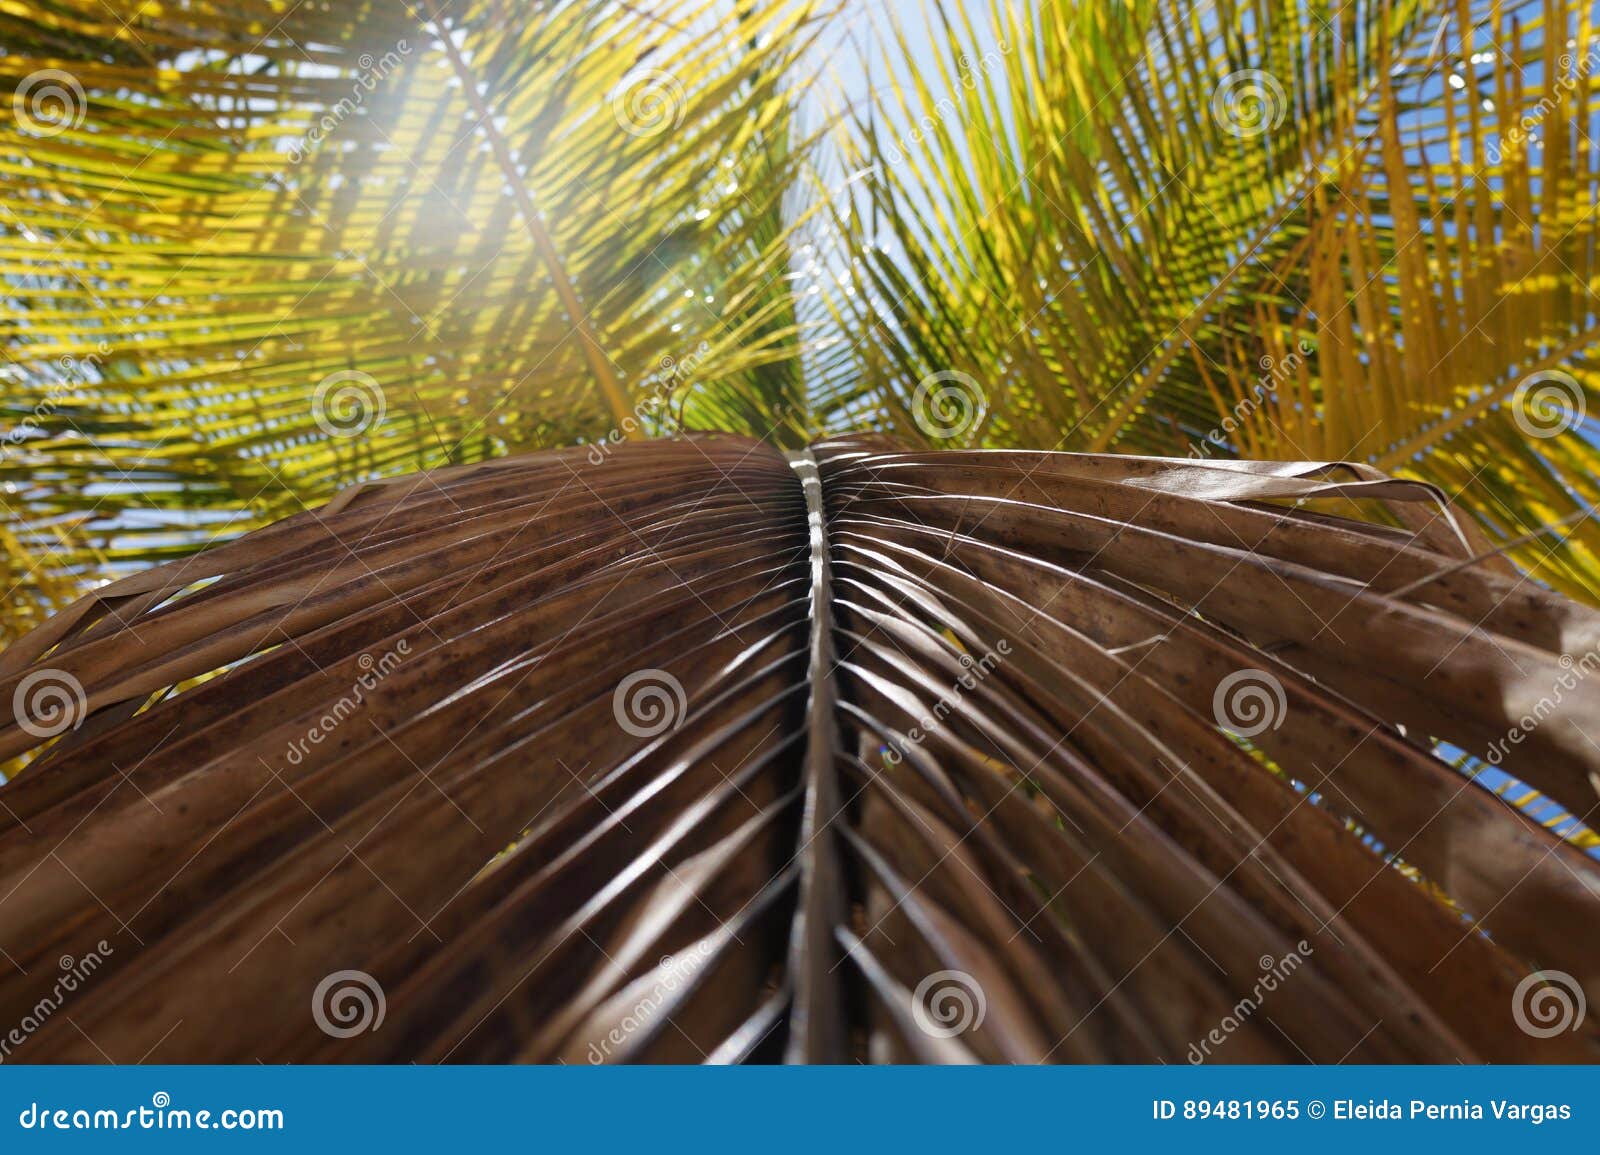 Caraïbische palm. Kokosnotenpalmblad op strandsan luis, Cumana, Venezuela